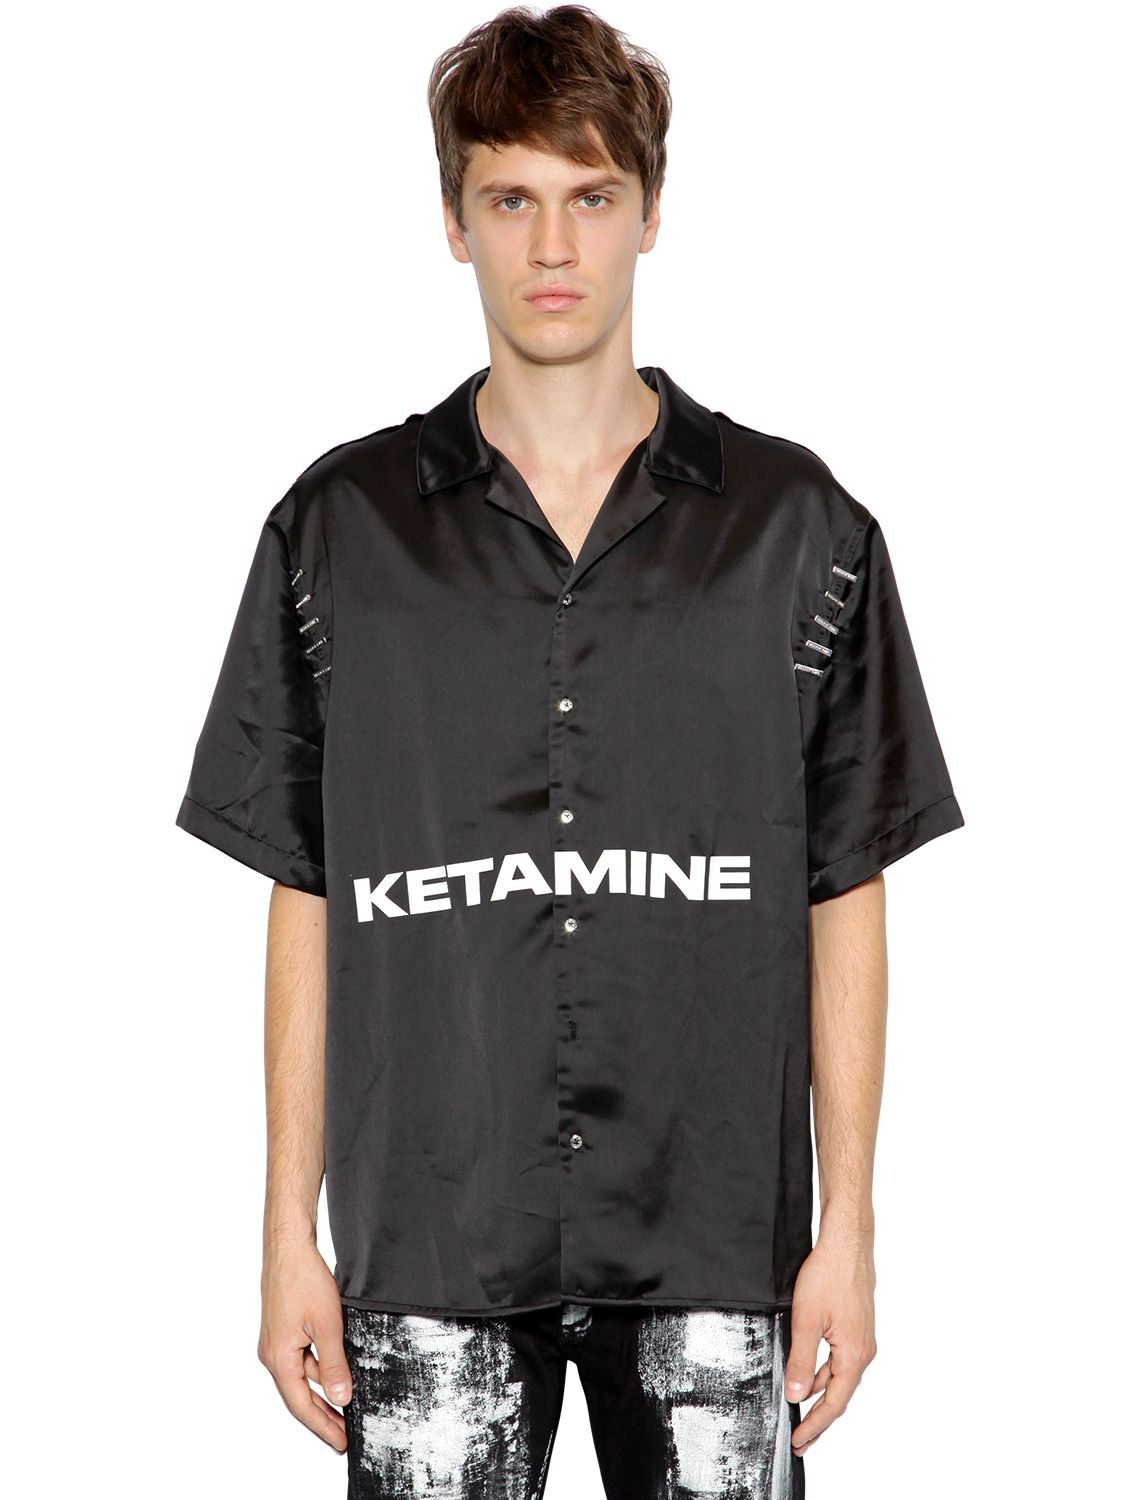 Heliot Emil Stapled Ketamine Print Satin Shirt In Black